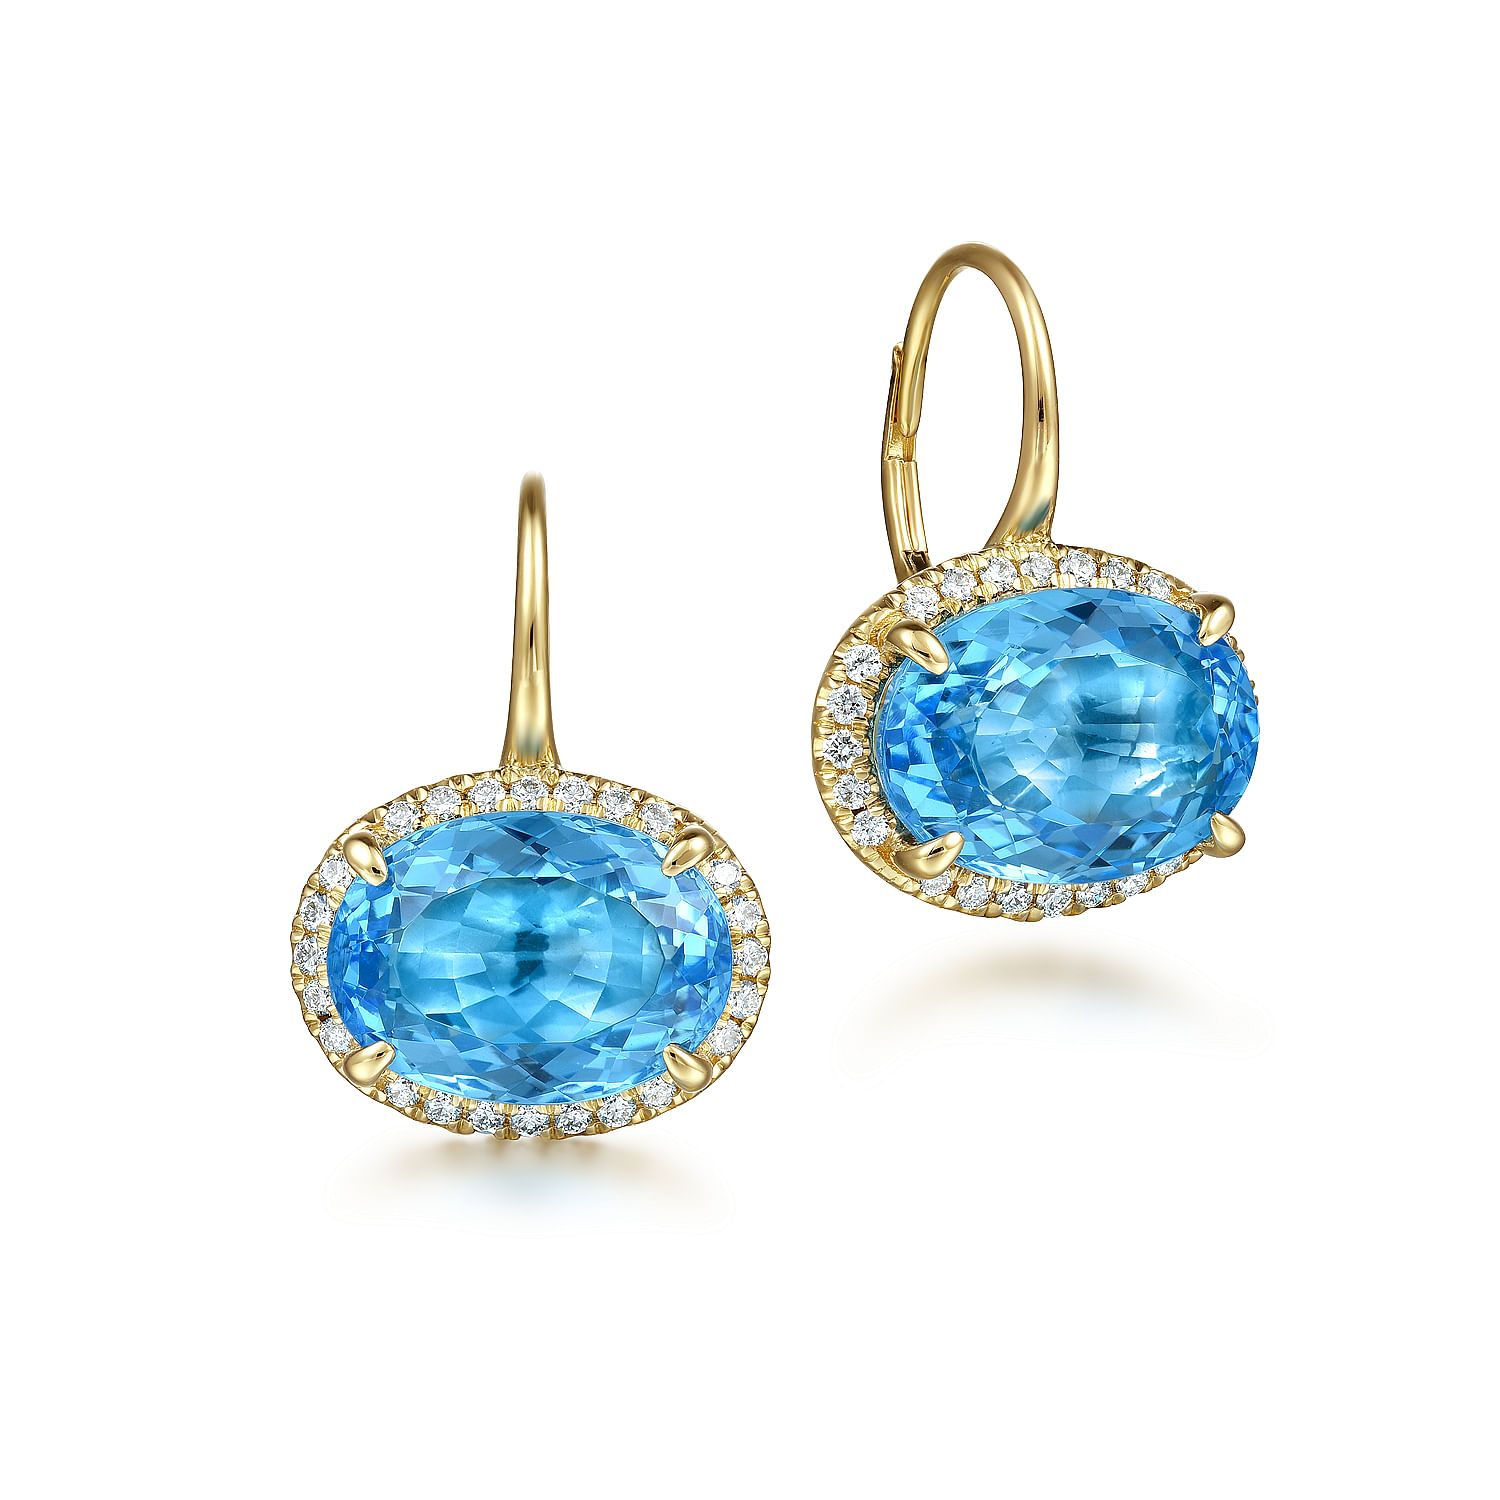 14K Yellow Gold Diamond and Blue Topaz Oval Shape Earrings With Flower Pattern J-Back